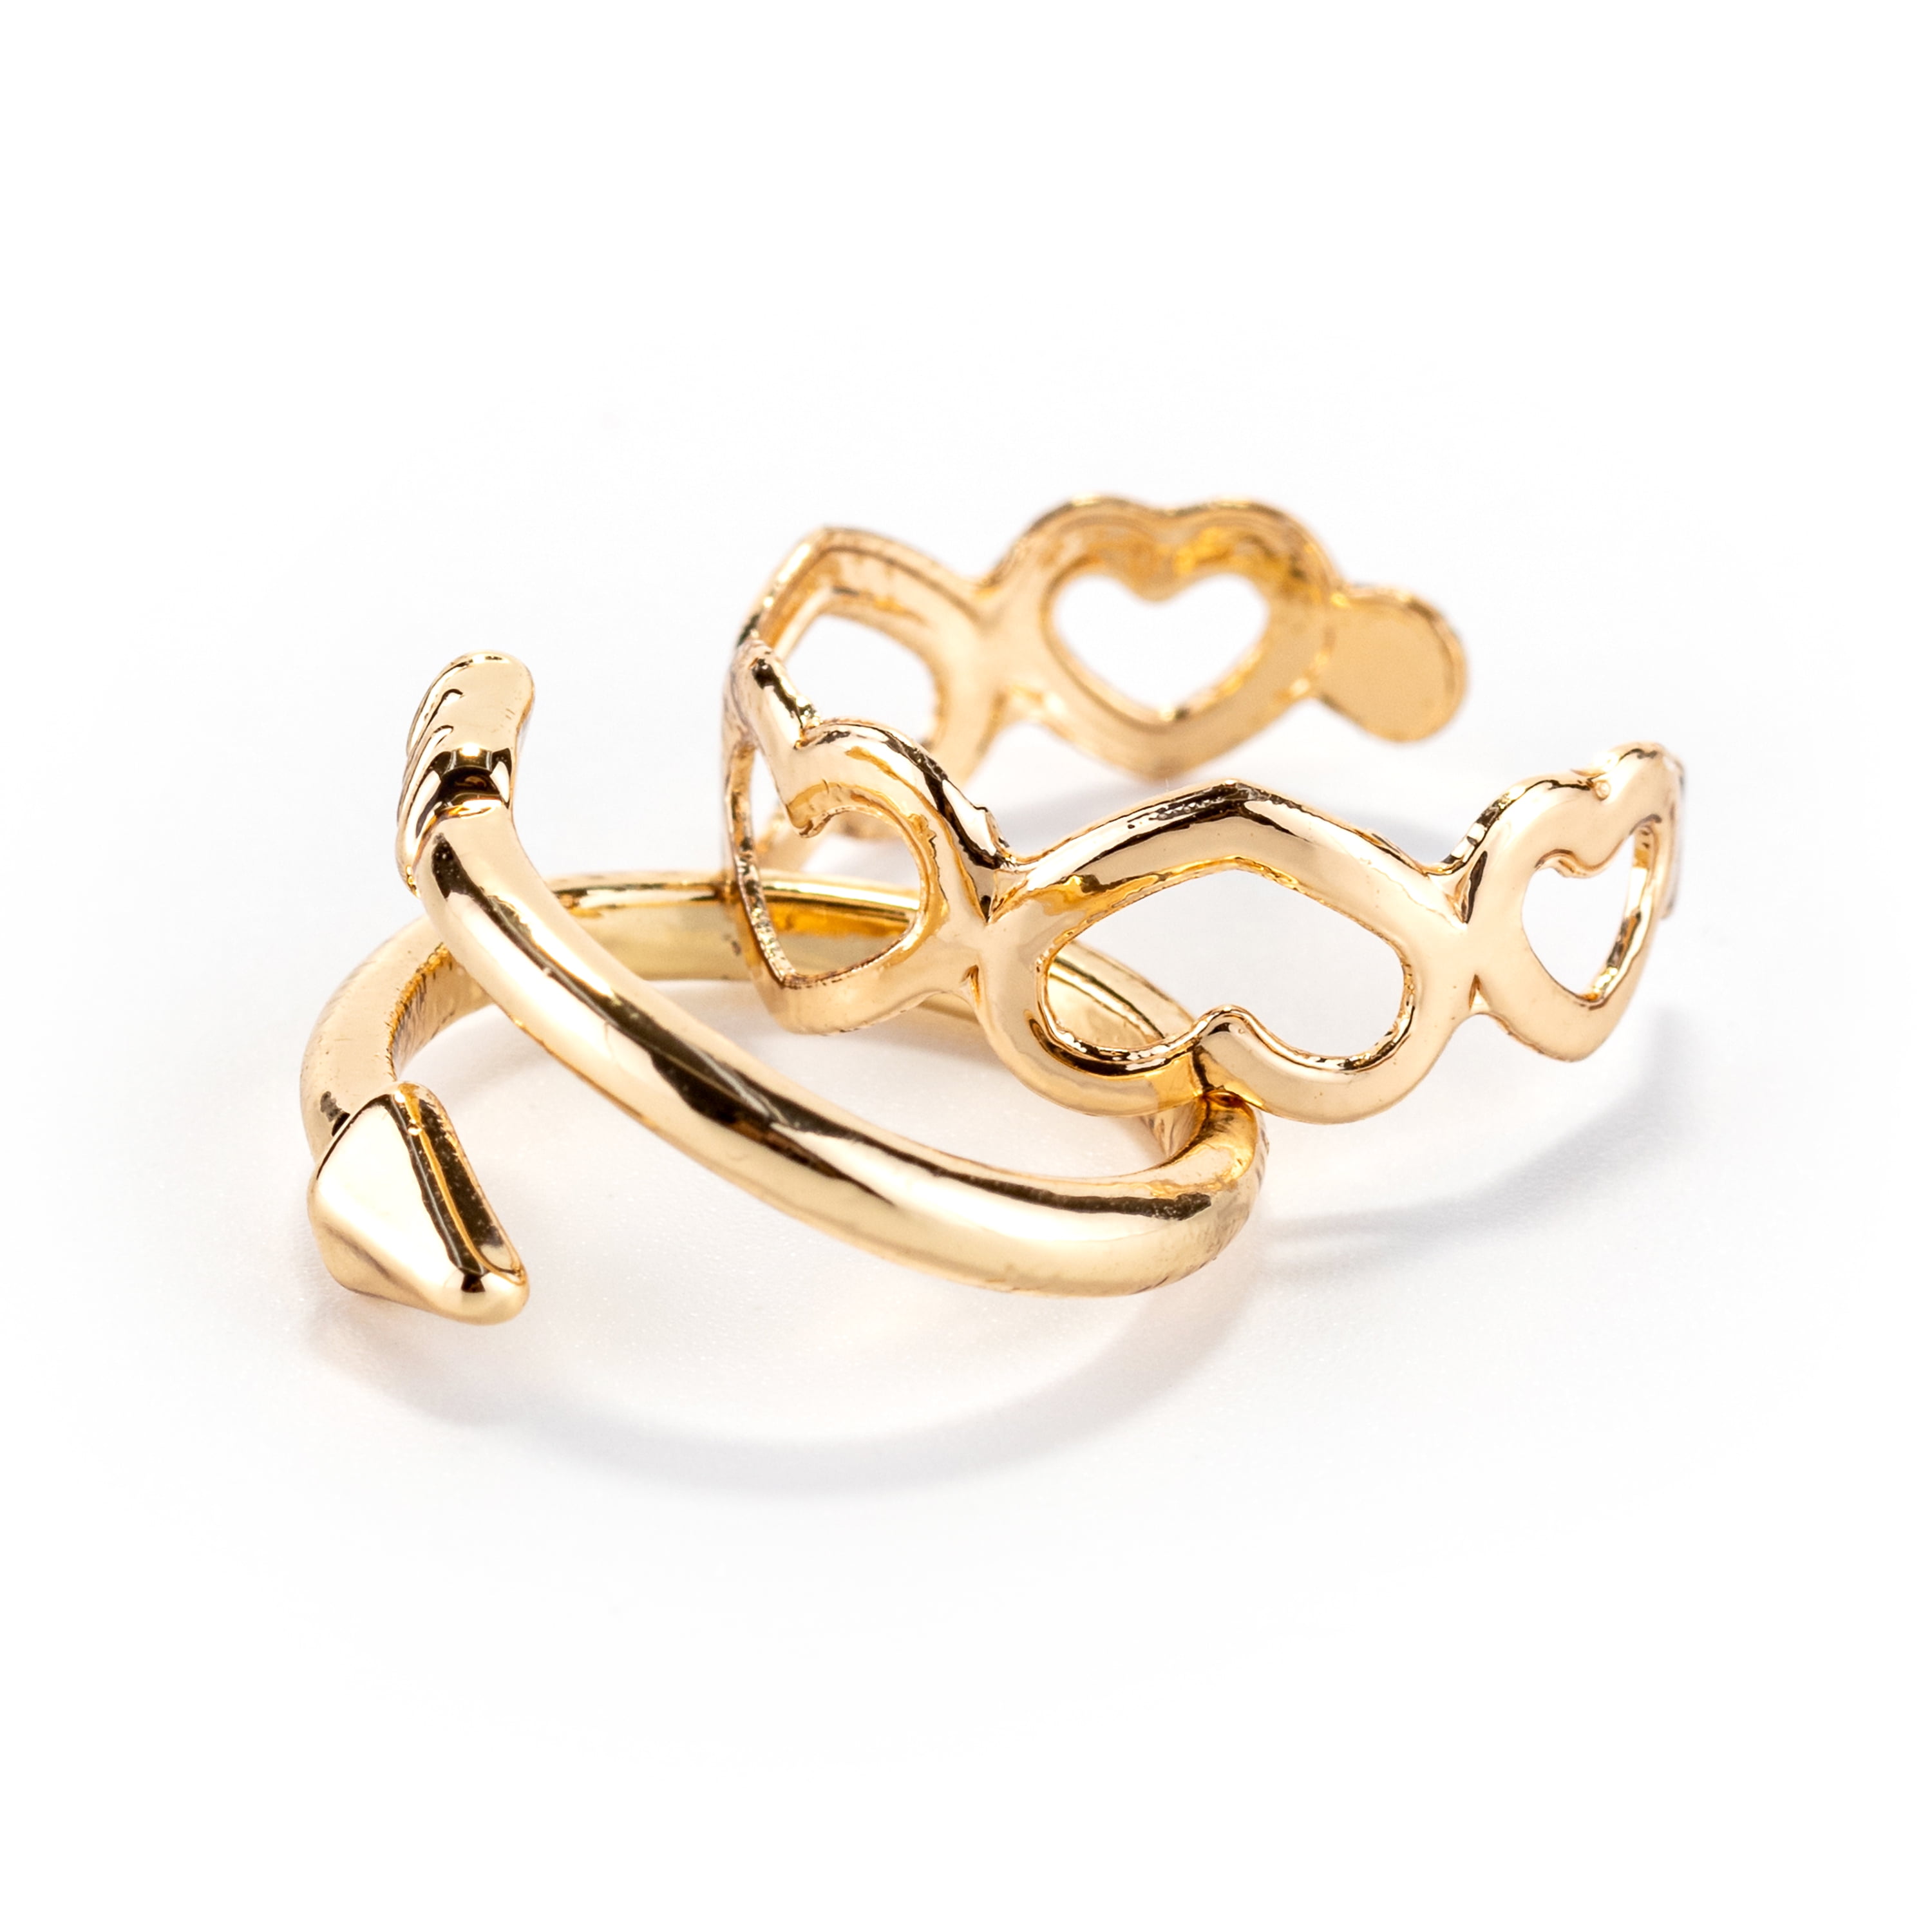 Dcfywl731 5Pcs Toe Rings for Women Flower Open Cuff Toe Ring Heart  Adjustable Beach Gold Toe Rings Foot Jewelry Gift for Women Girl